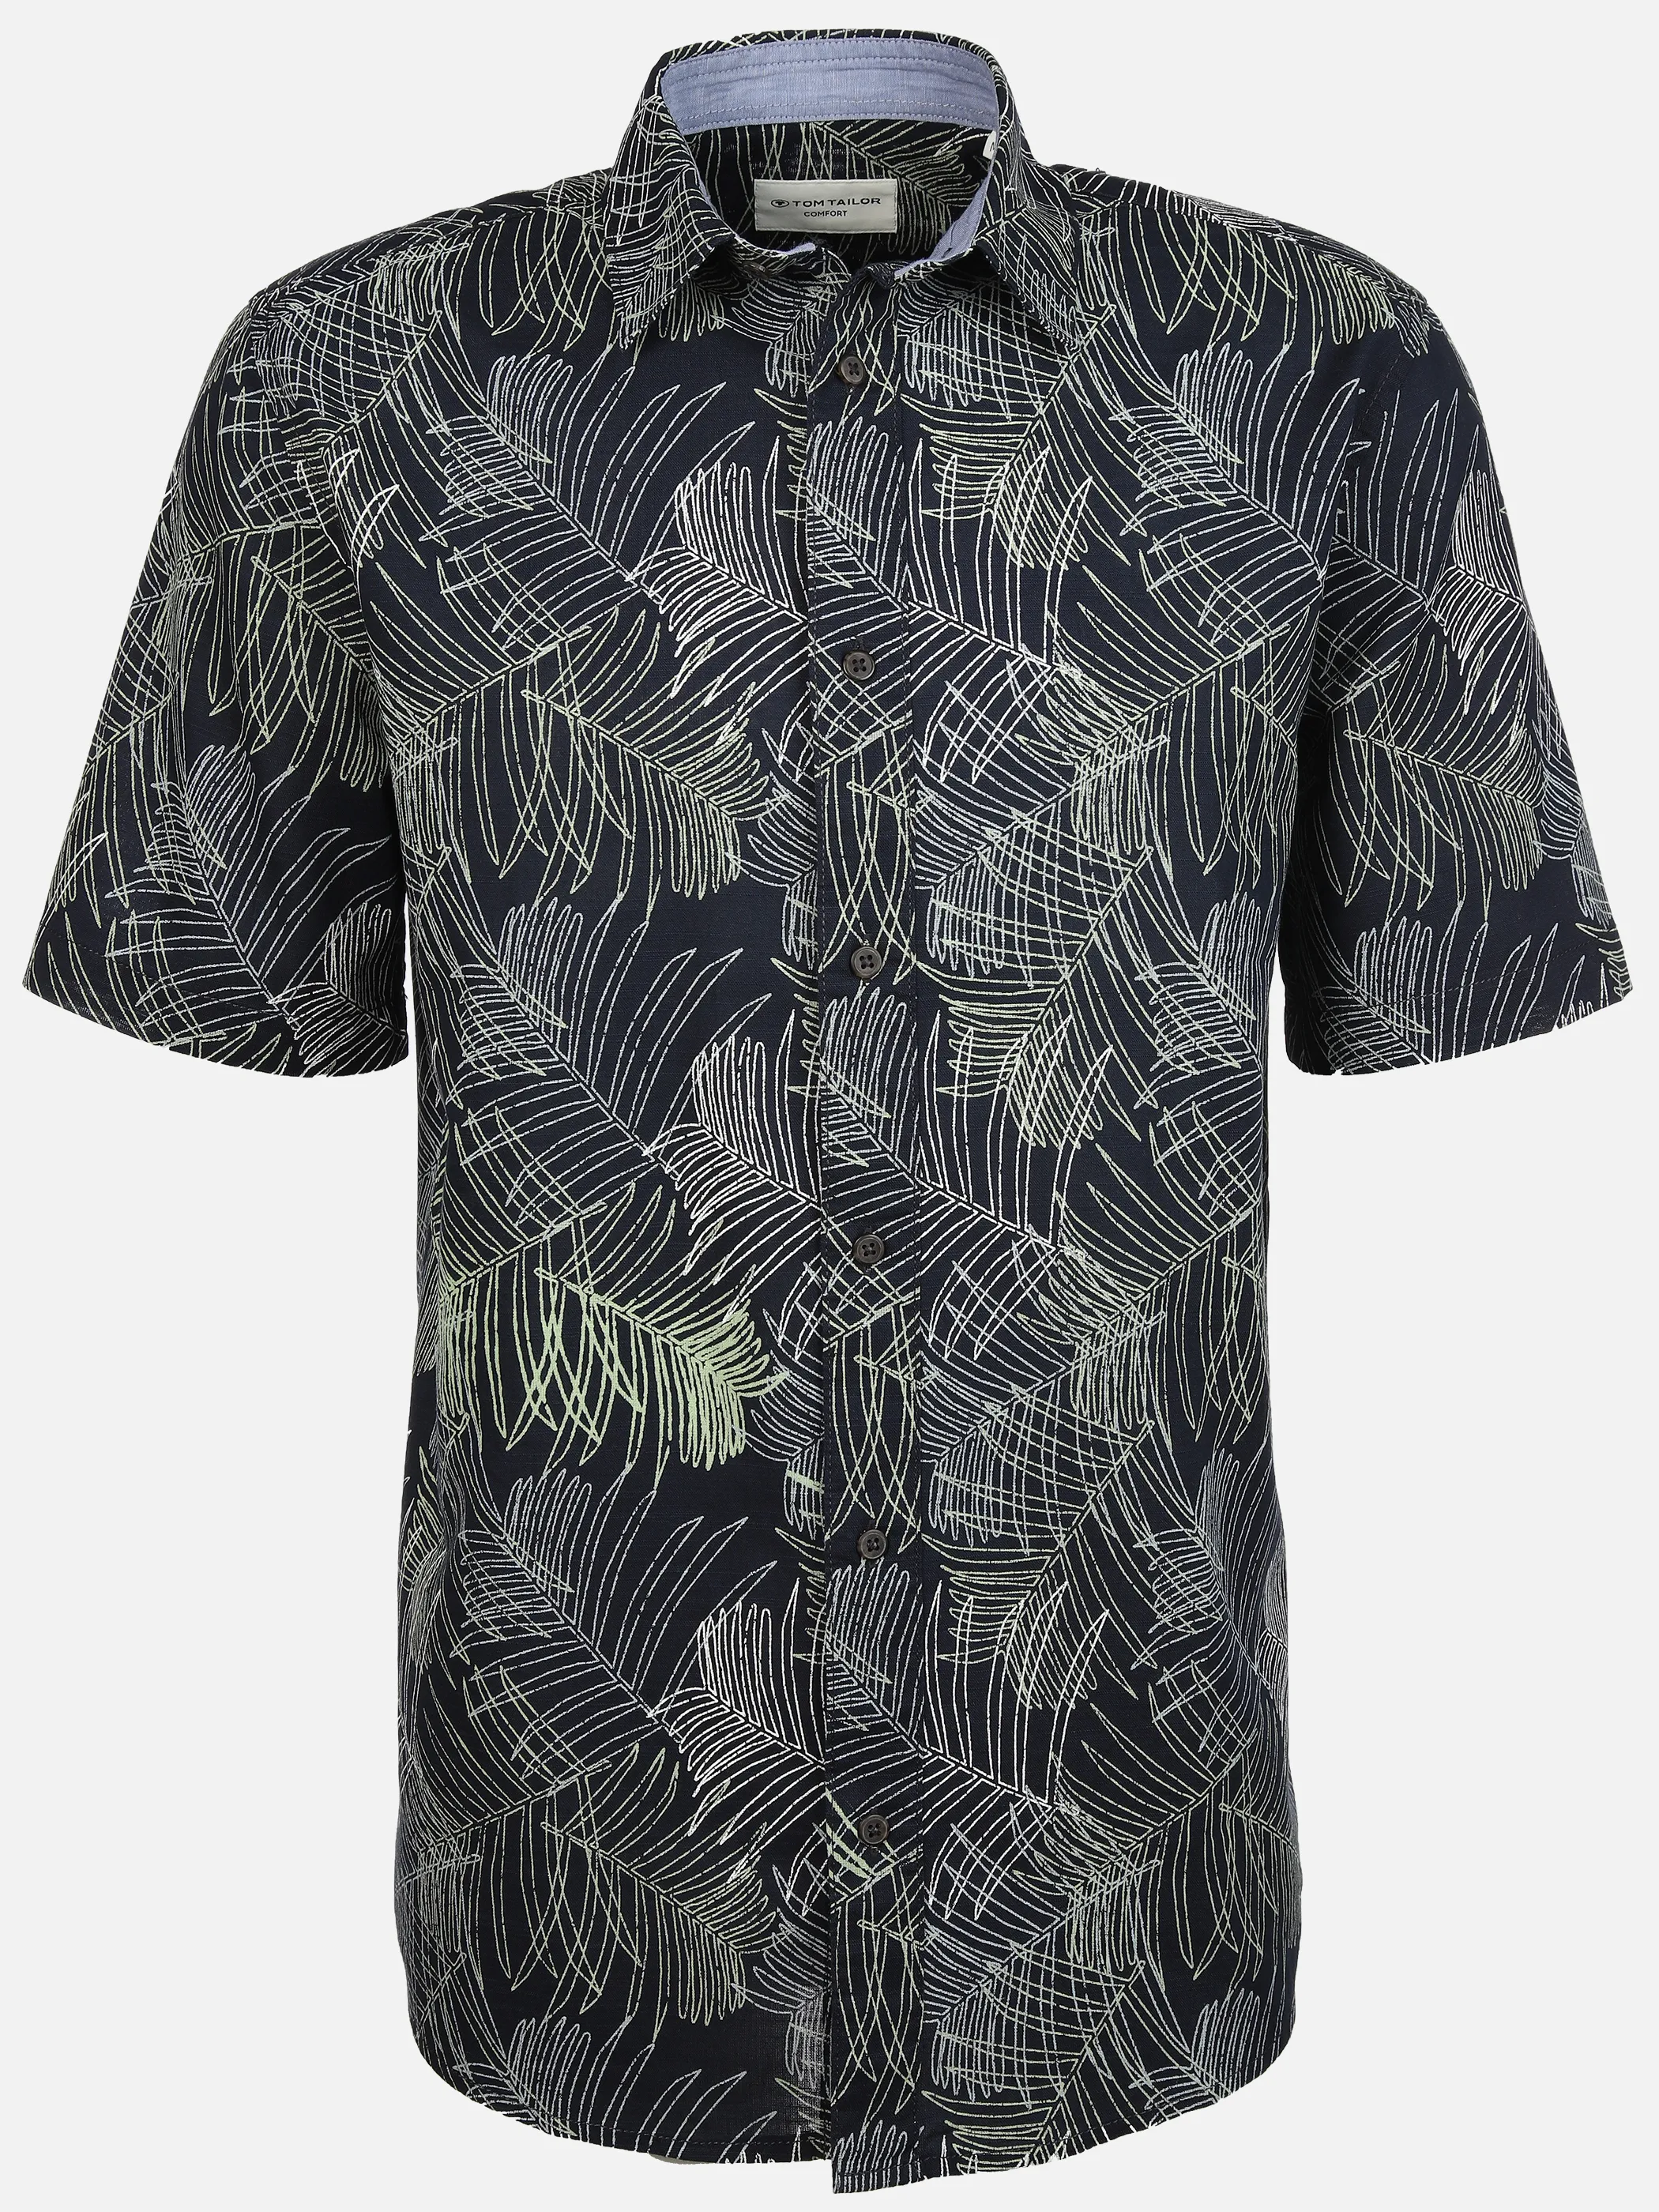 Tom Tailor 1040128 comfort printed shirt Blau 890955 35095 1